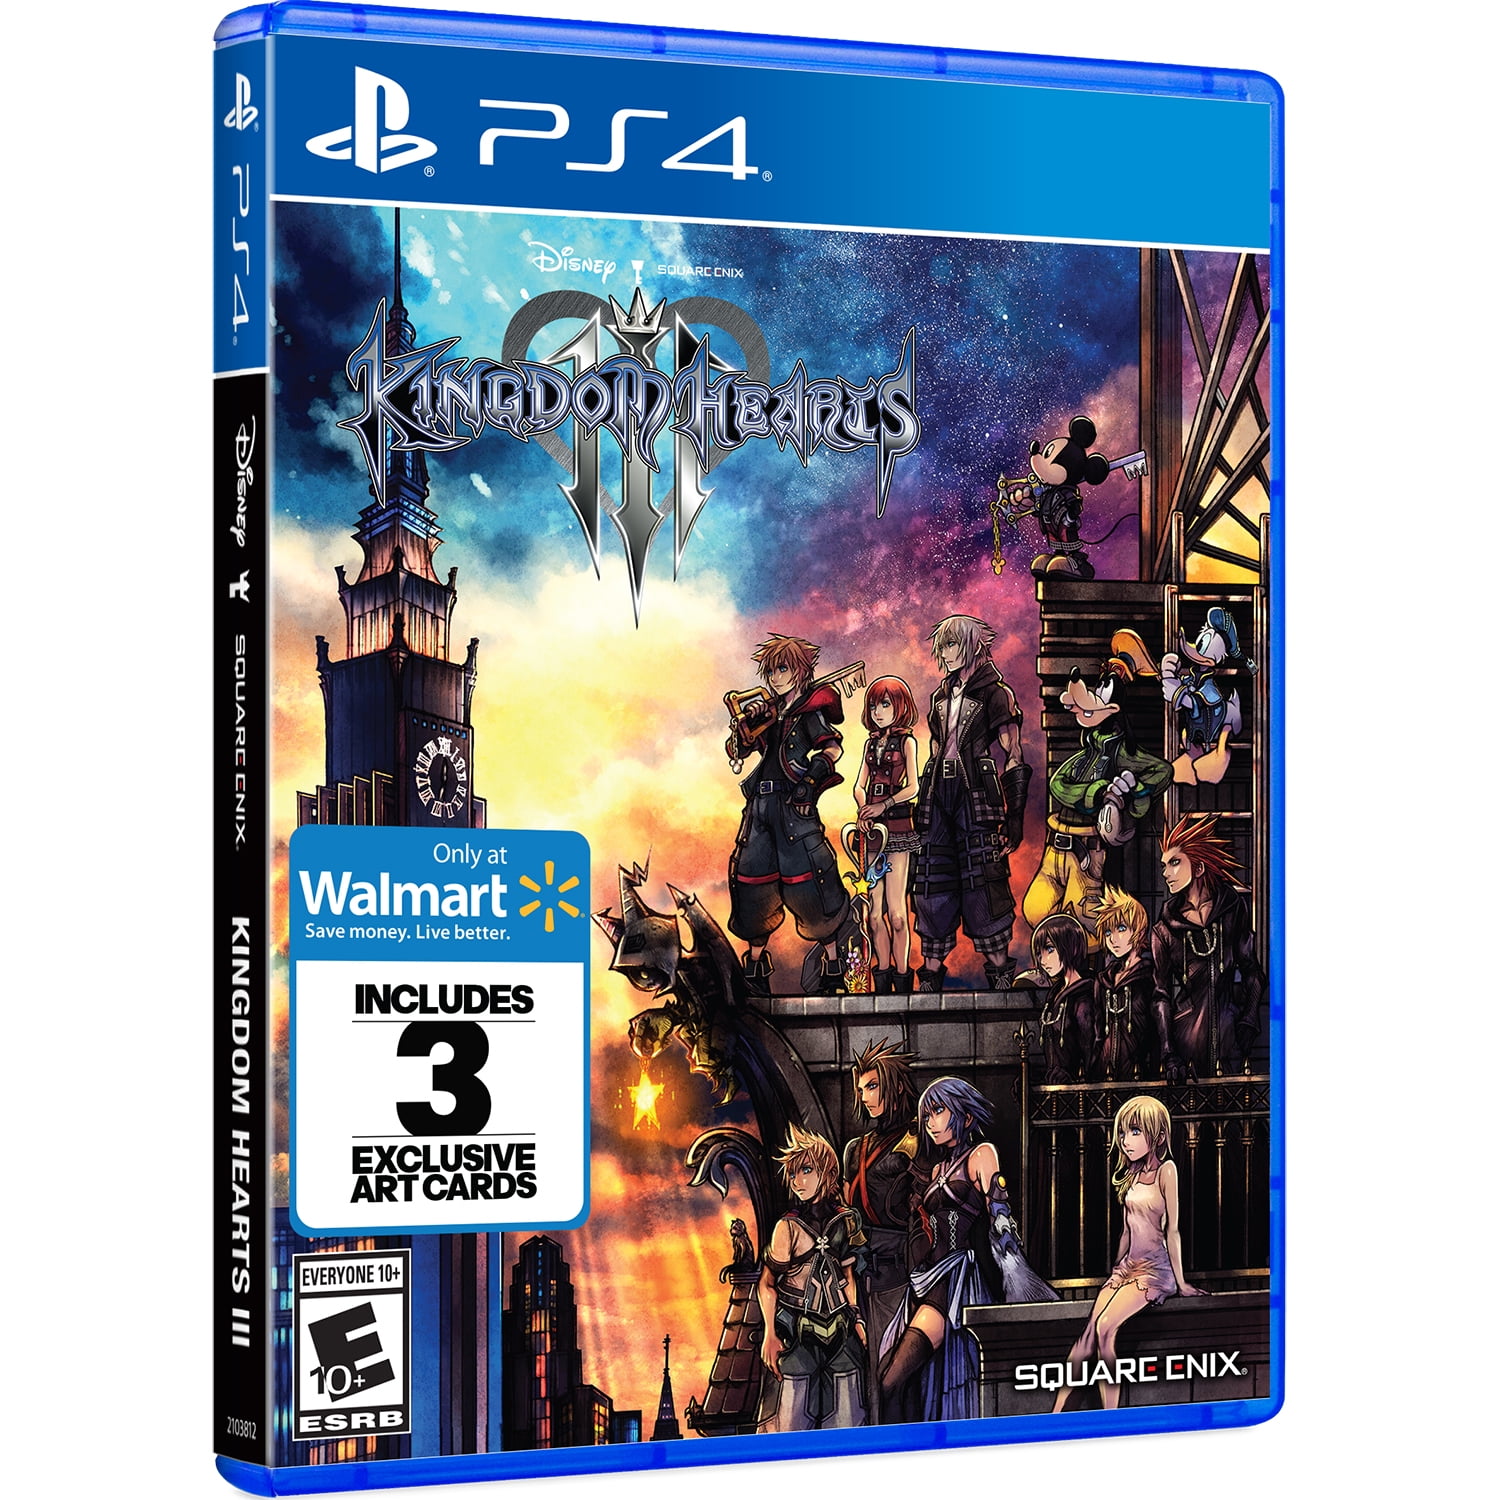 Walmart Exclusive: Kingdom Hearts 3, Square Enix, PlayStation 4,  662248921907